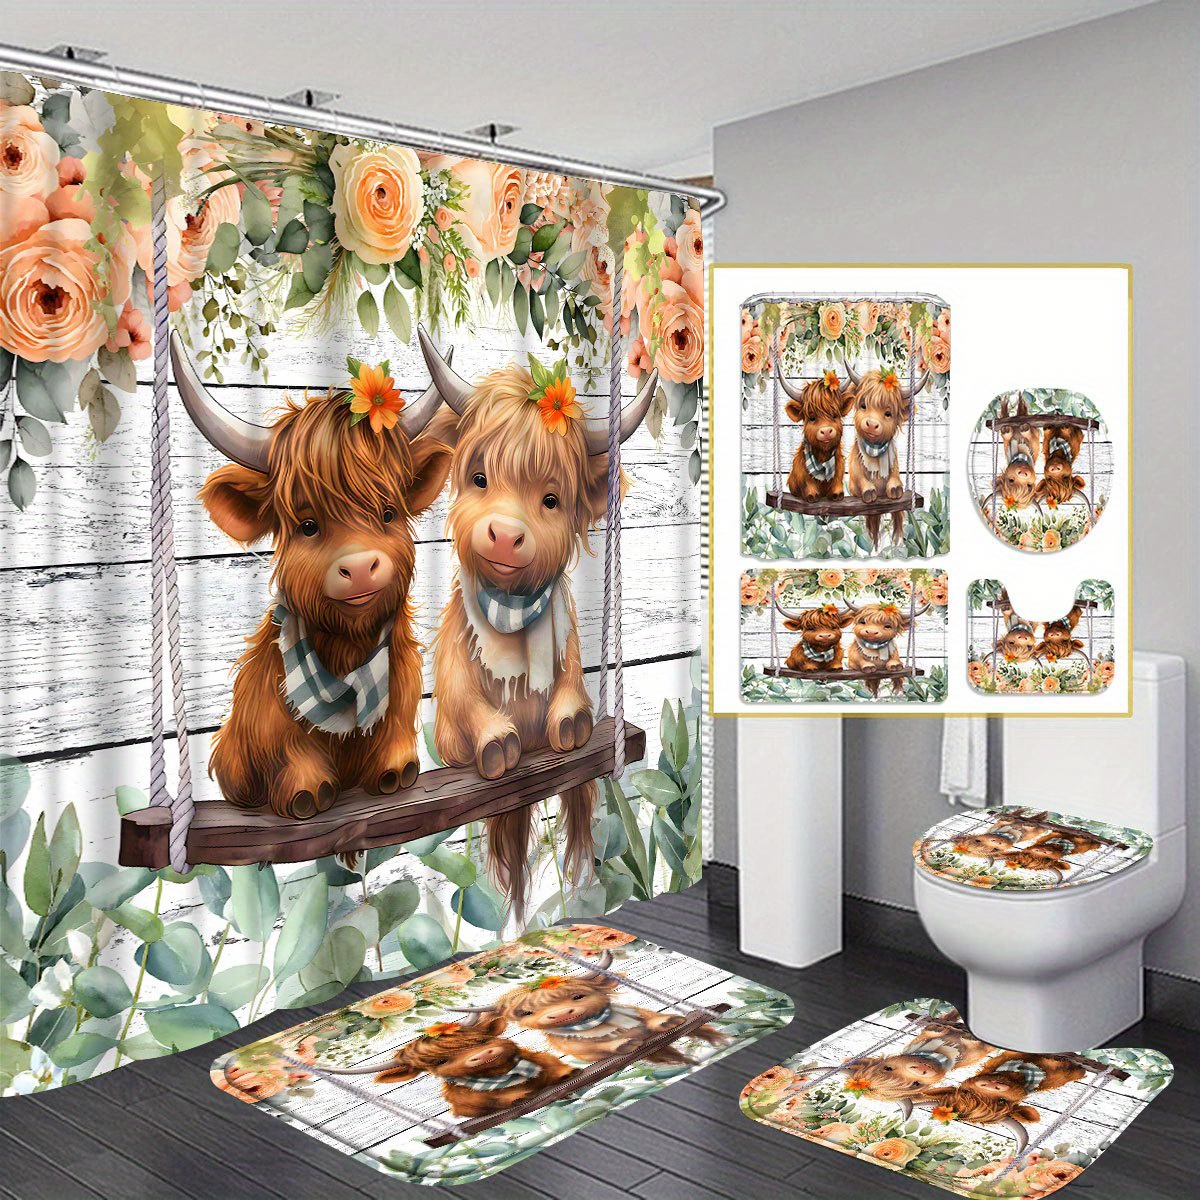 

1pcs/4pcs Wreath Calf Shower Curtain Gift Modern Home Bathroom Decoration Curtain And Toilet Floor Mat 3-piece Set With 12 Shower Curtain Hooks